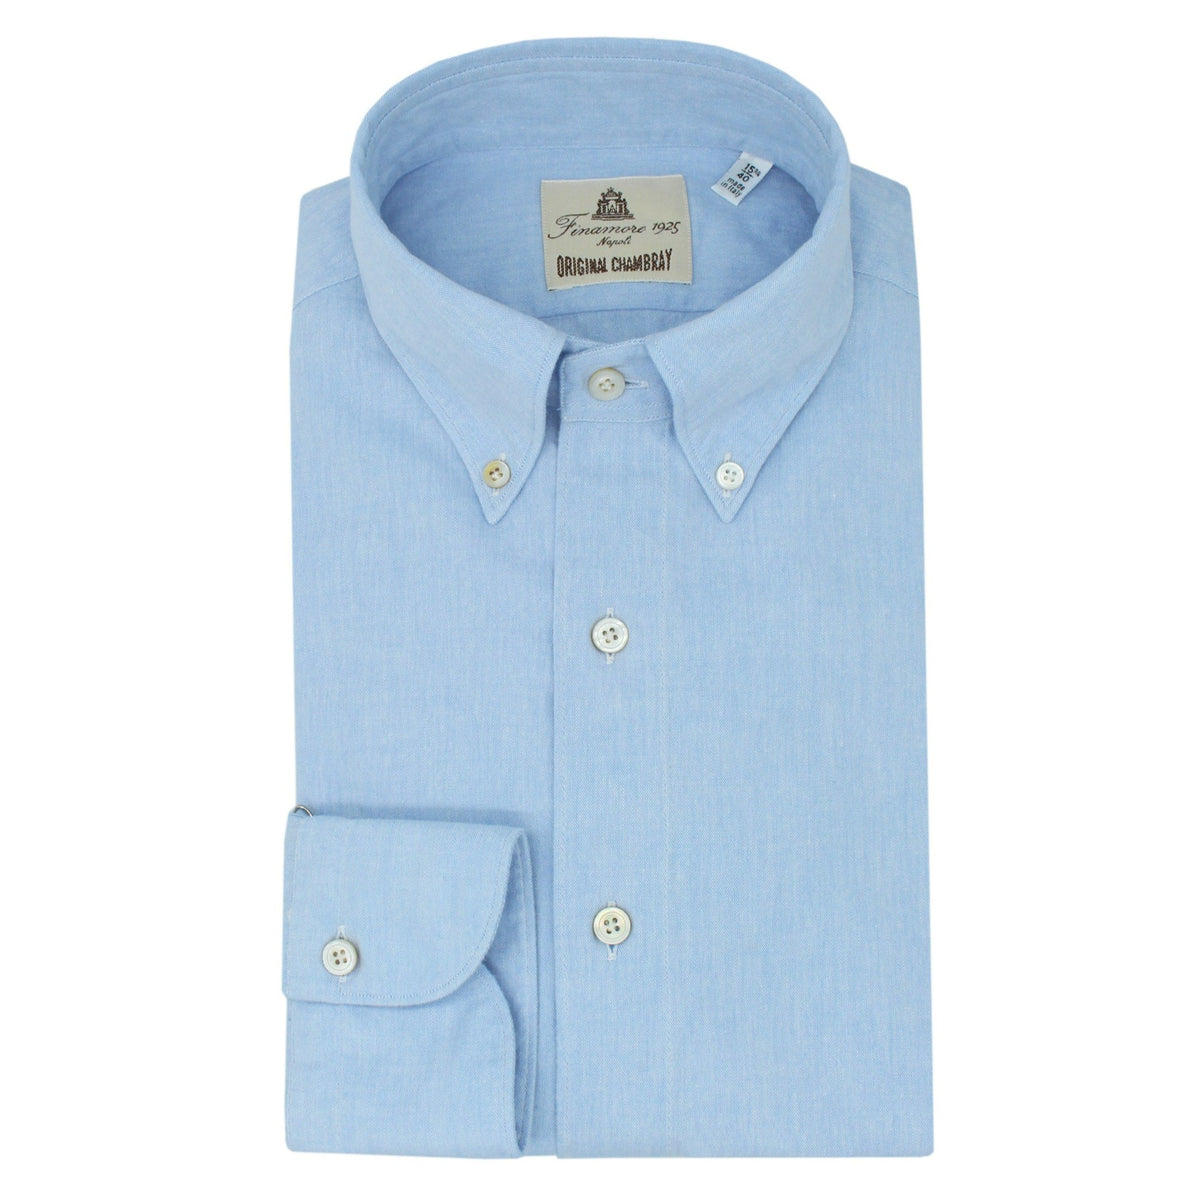 TOKYO sport shirt slim fit cotton original chambray light blue